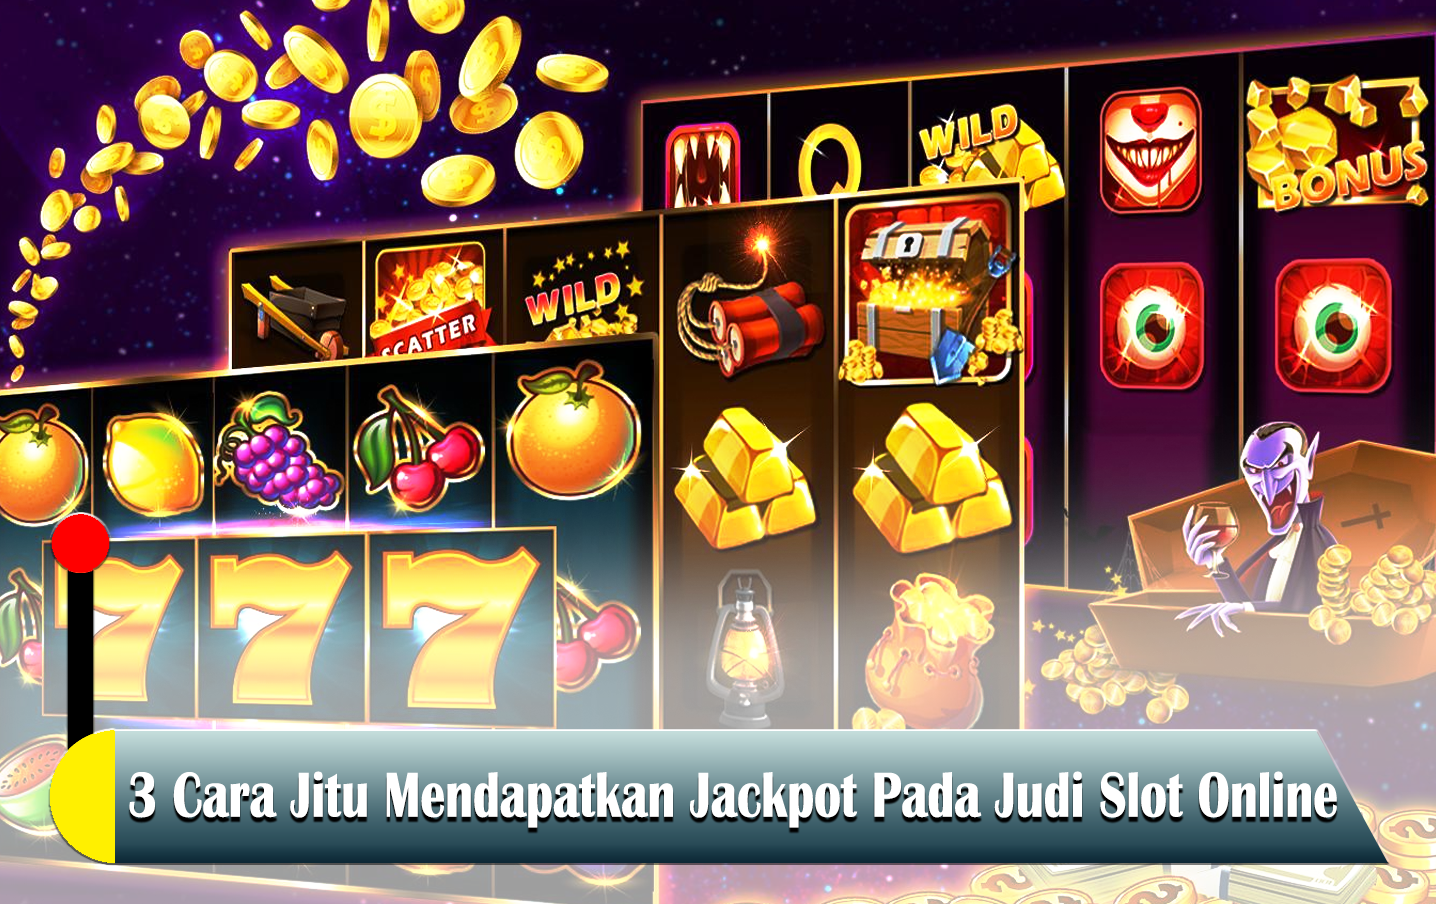 3 Cara Jitu Mendapatkan Jackpot Pada Judi Slot Online